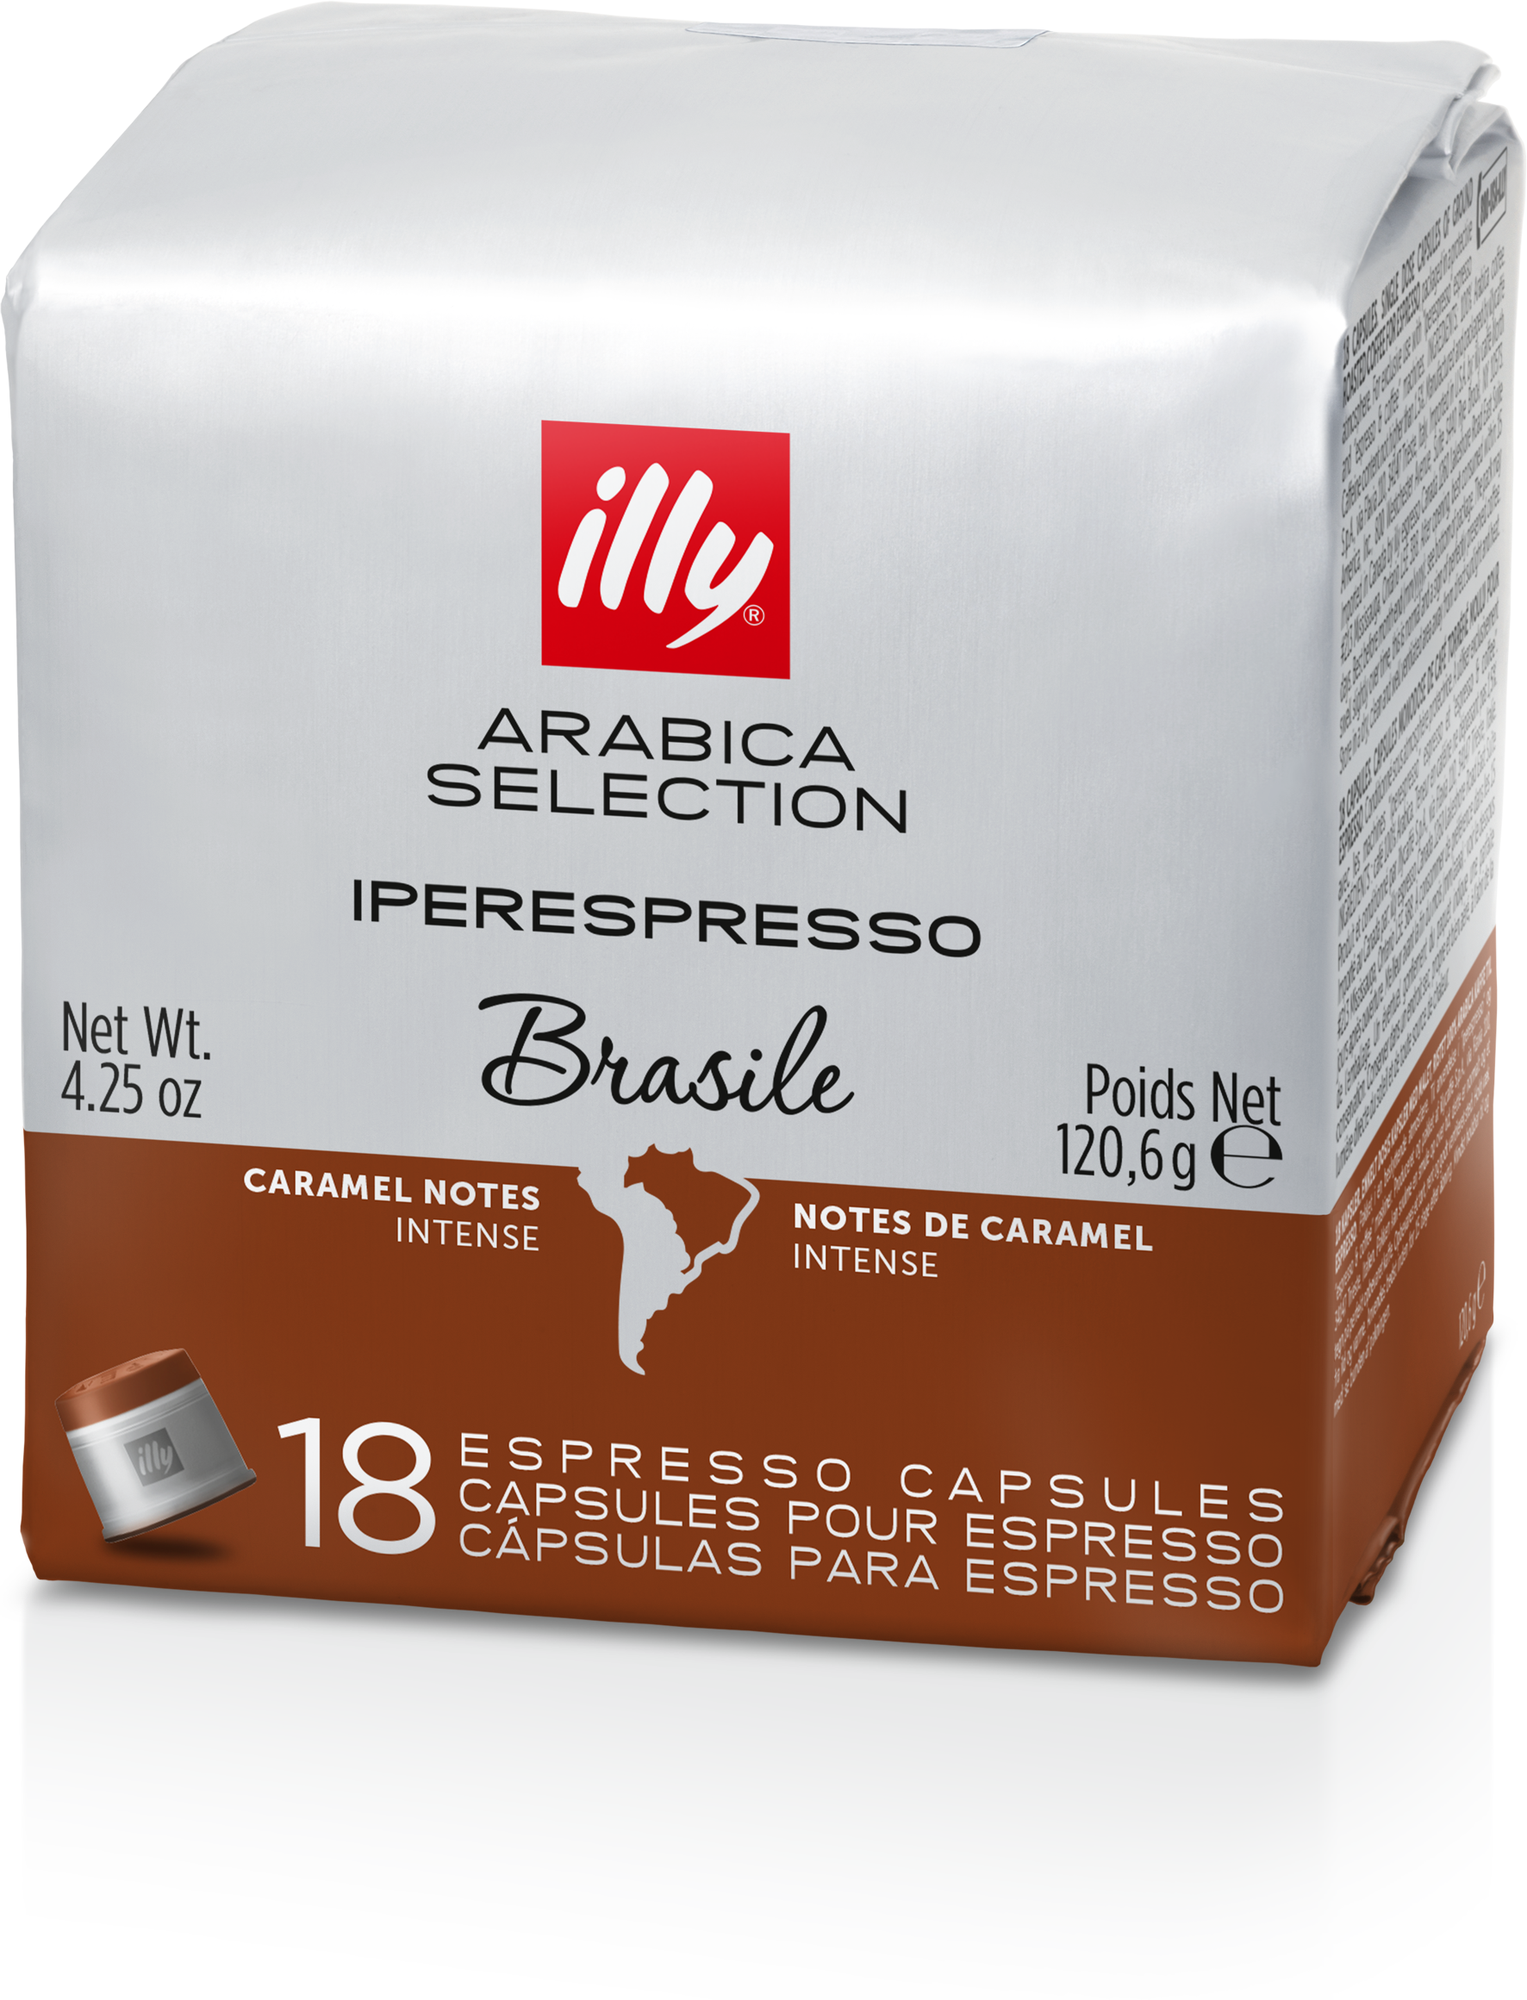 Кофе illy в капсулах ipso home, средней обжарки, Арабика Селекшн, Бразилия, 18 капс - фотография № 3